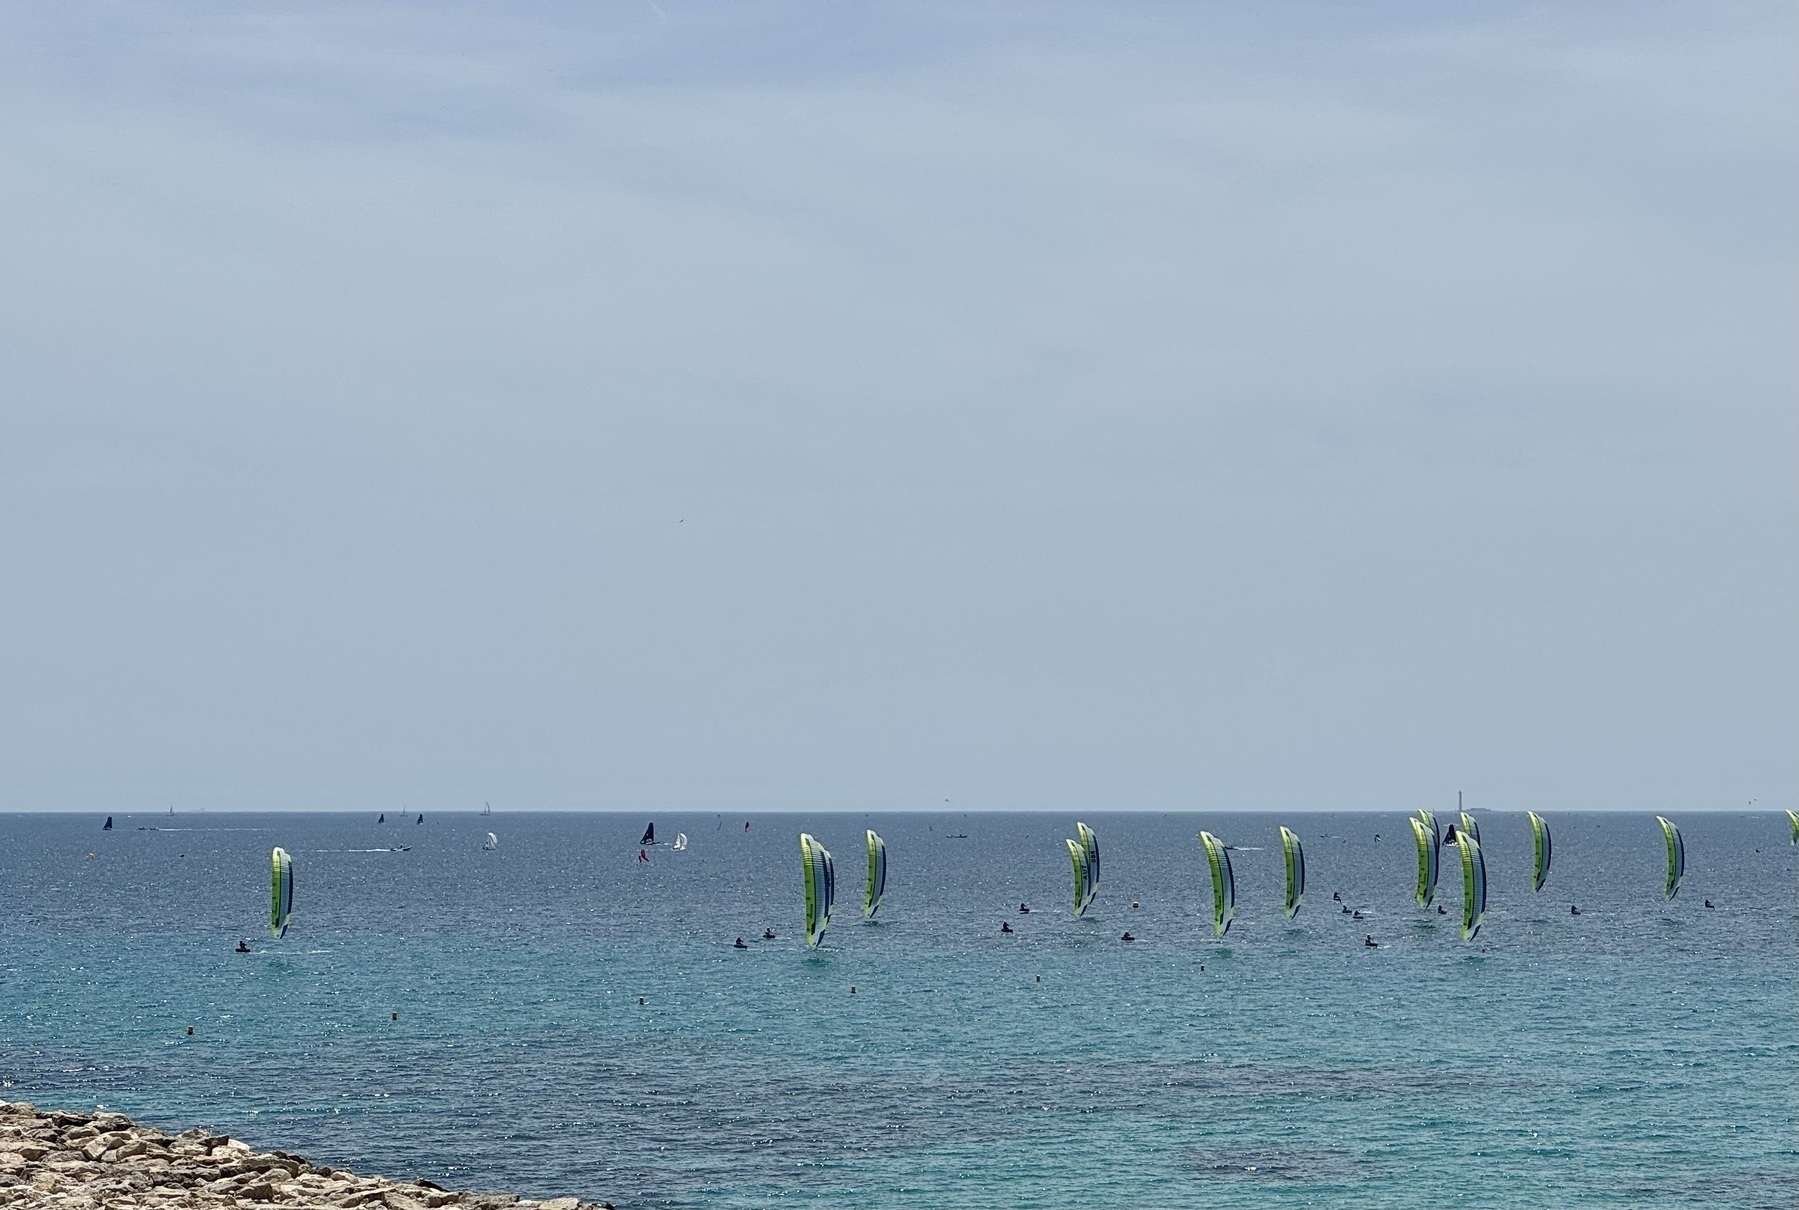 Kite surfers on the Mediterranean off the coast of Marseille.